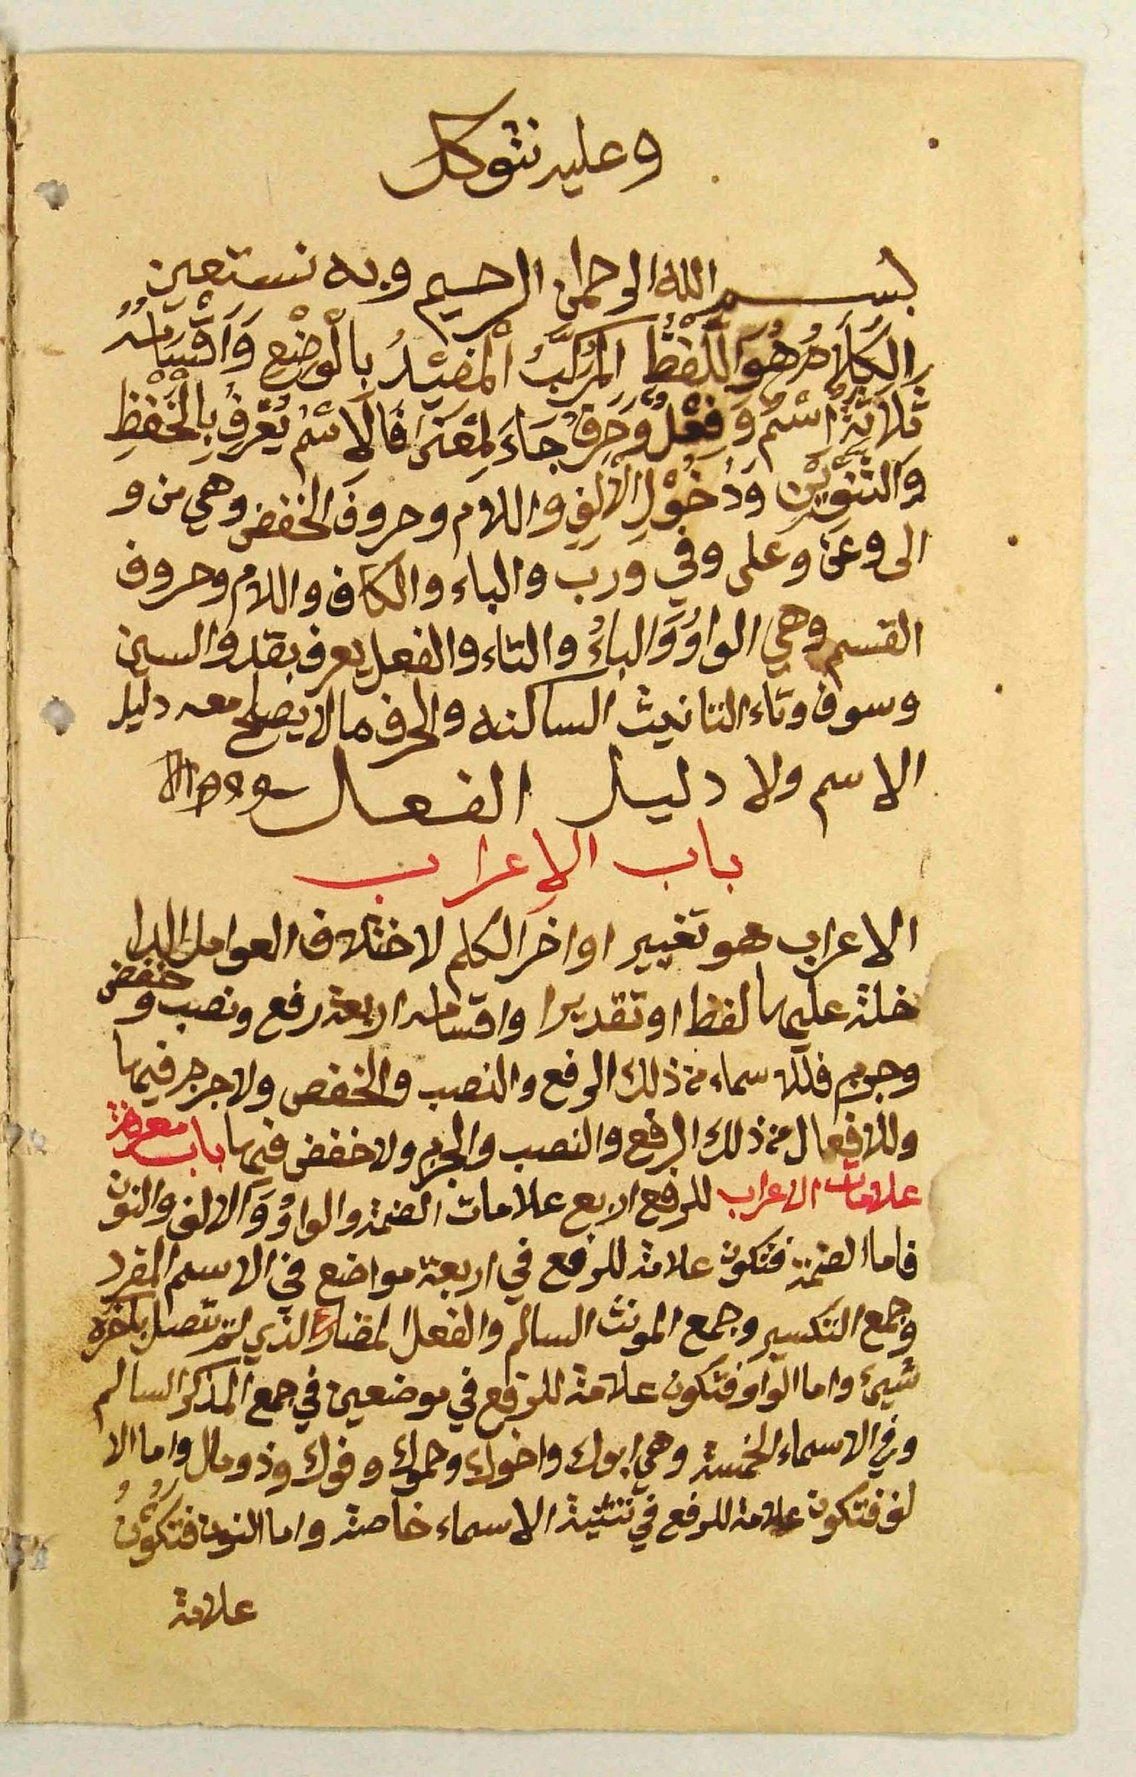 AAJURROMIYYAH [Arabic Grammar] - immagine di copertina
